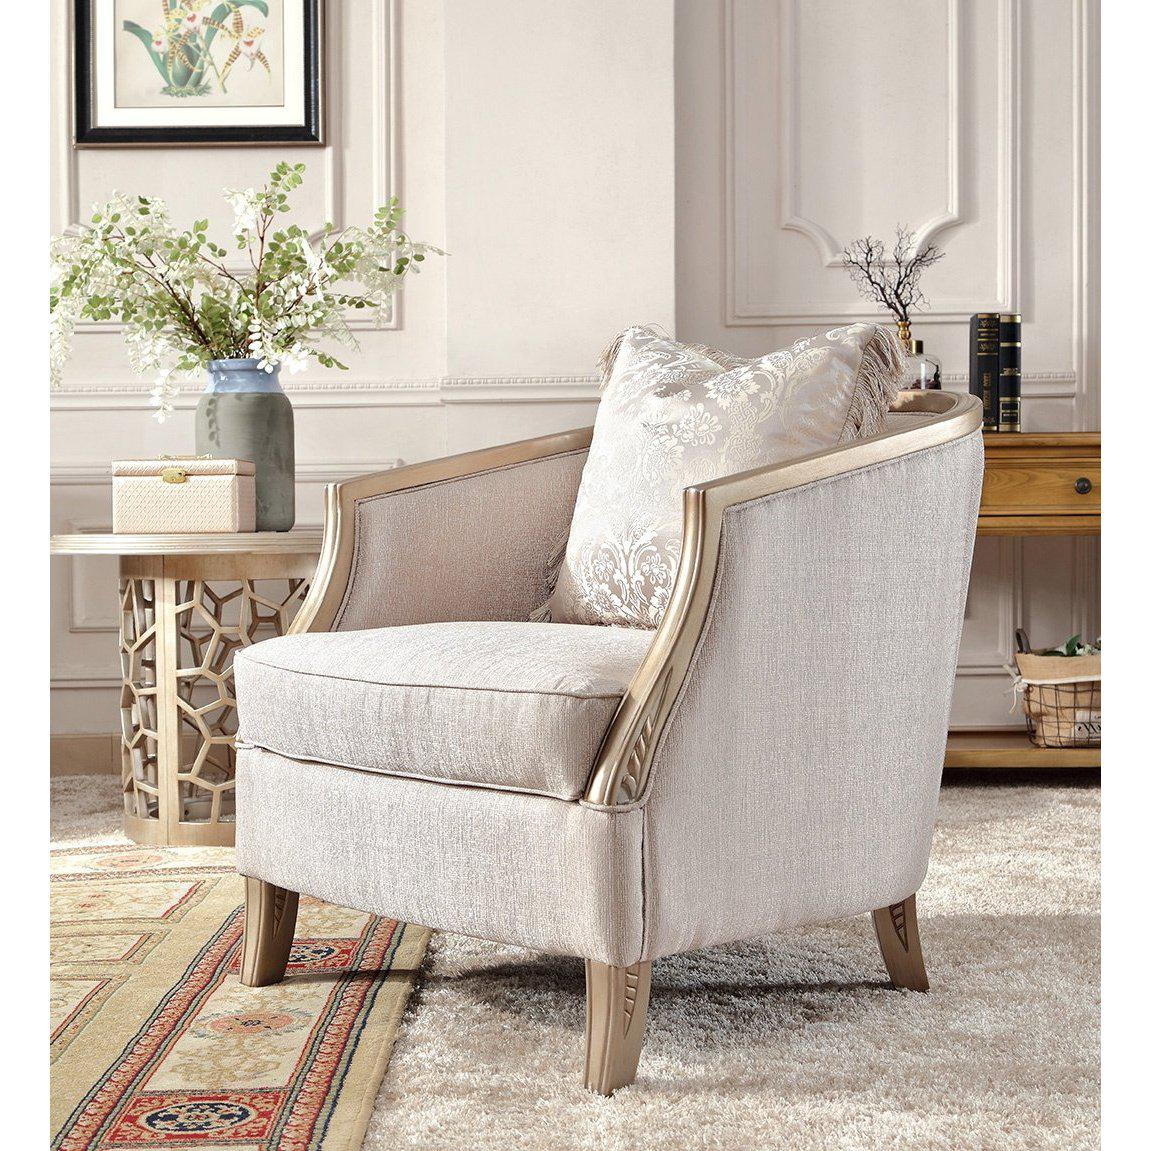 Homey Design Luxury Hd-632 - 3Pc Sofa Set-Iron Home Concepts